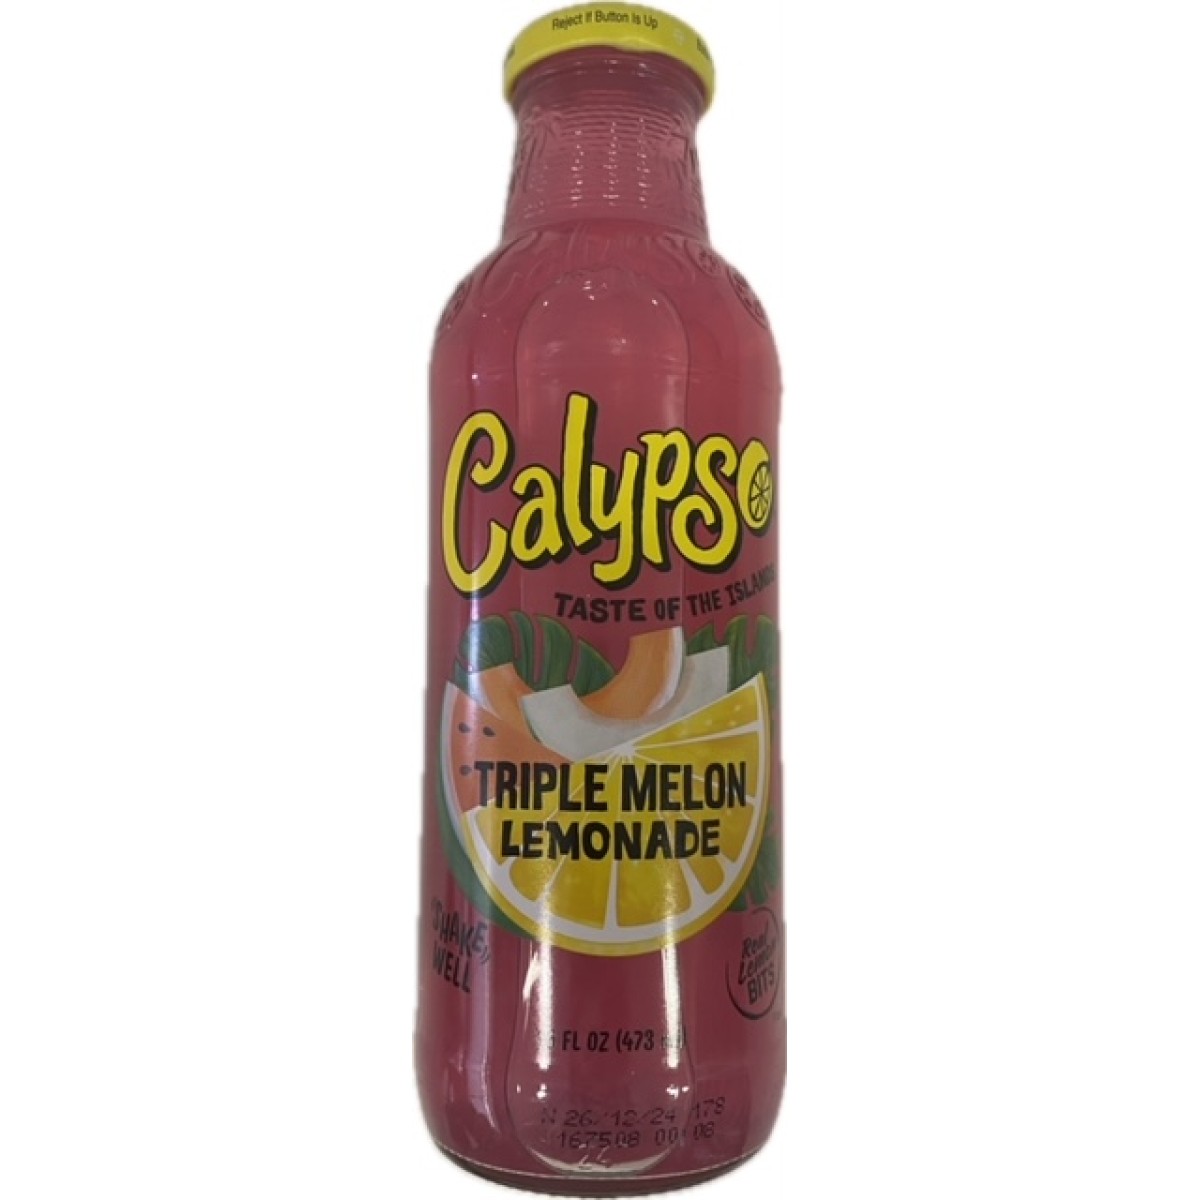 Calypso triple melon